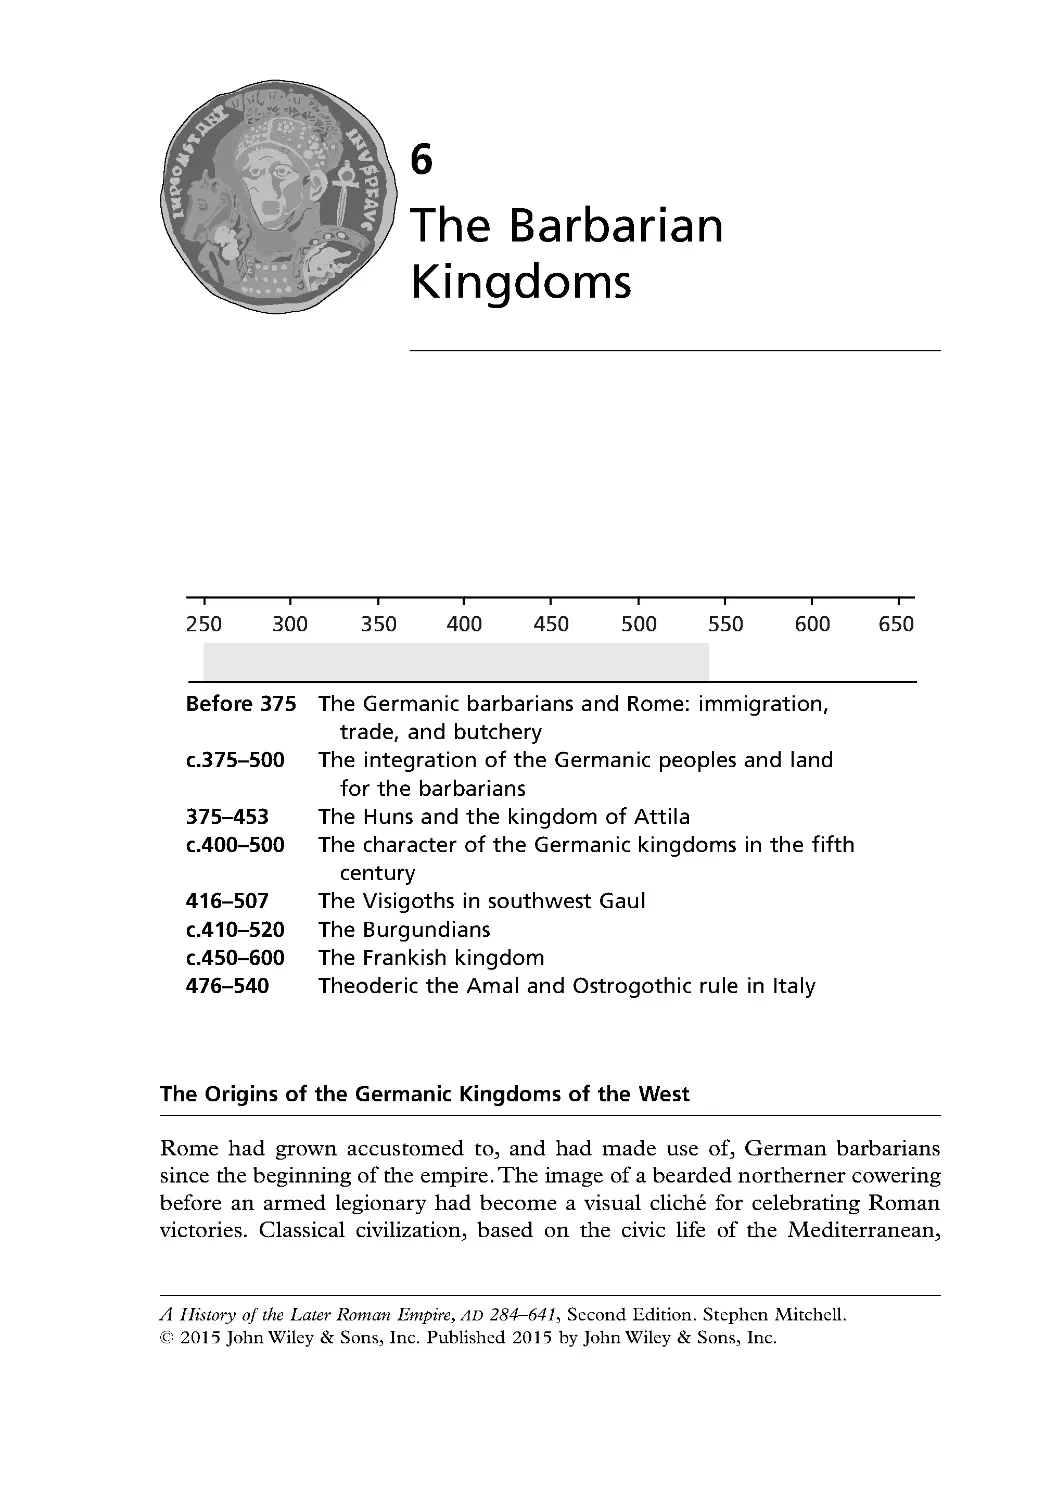 6: The Barbarian Kingdoms